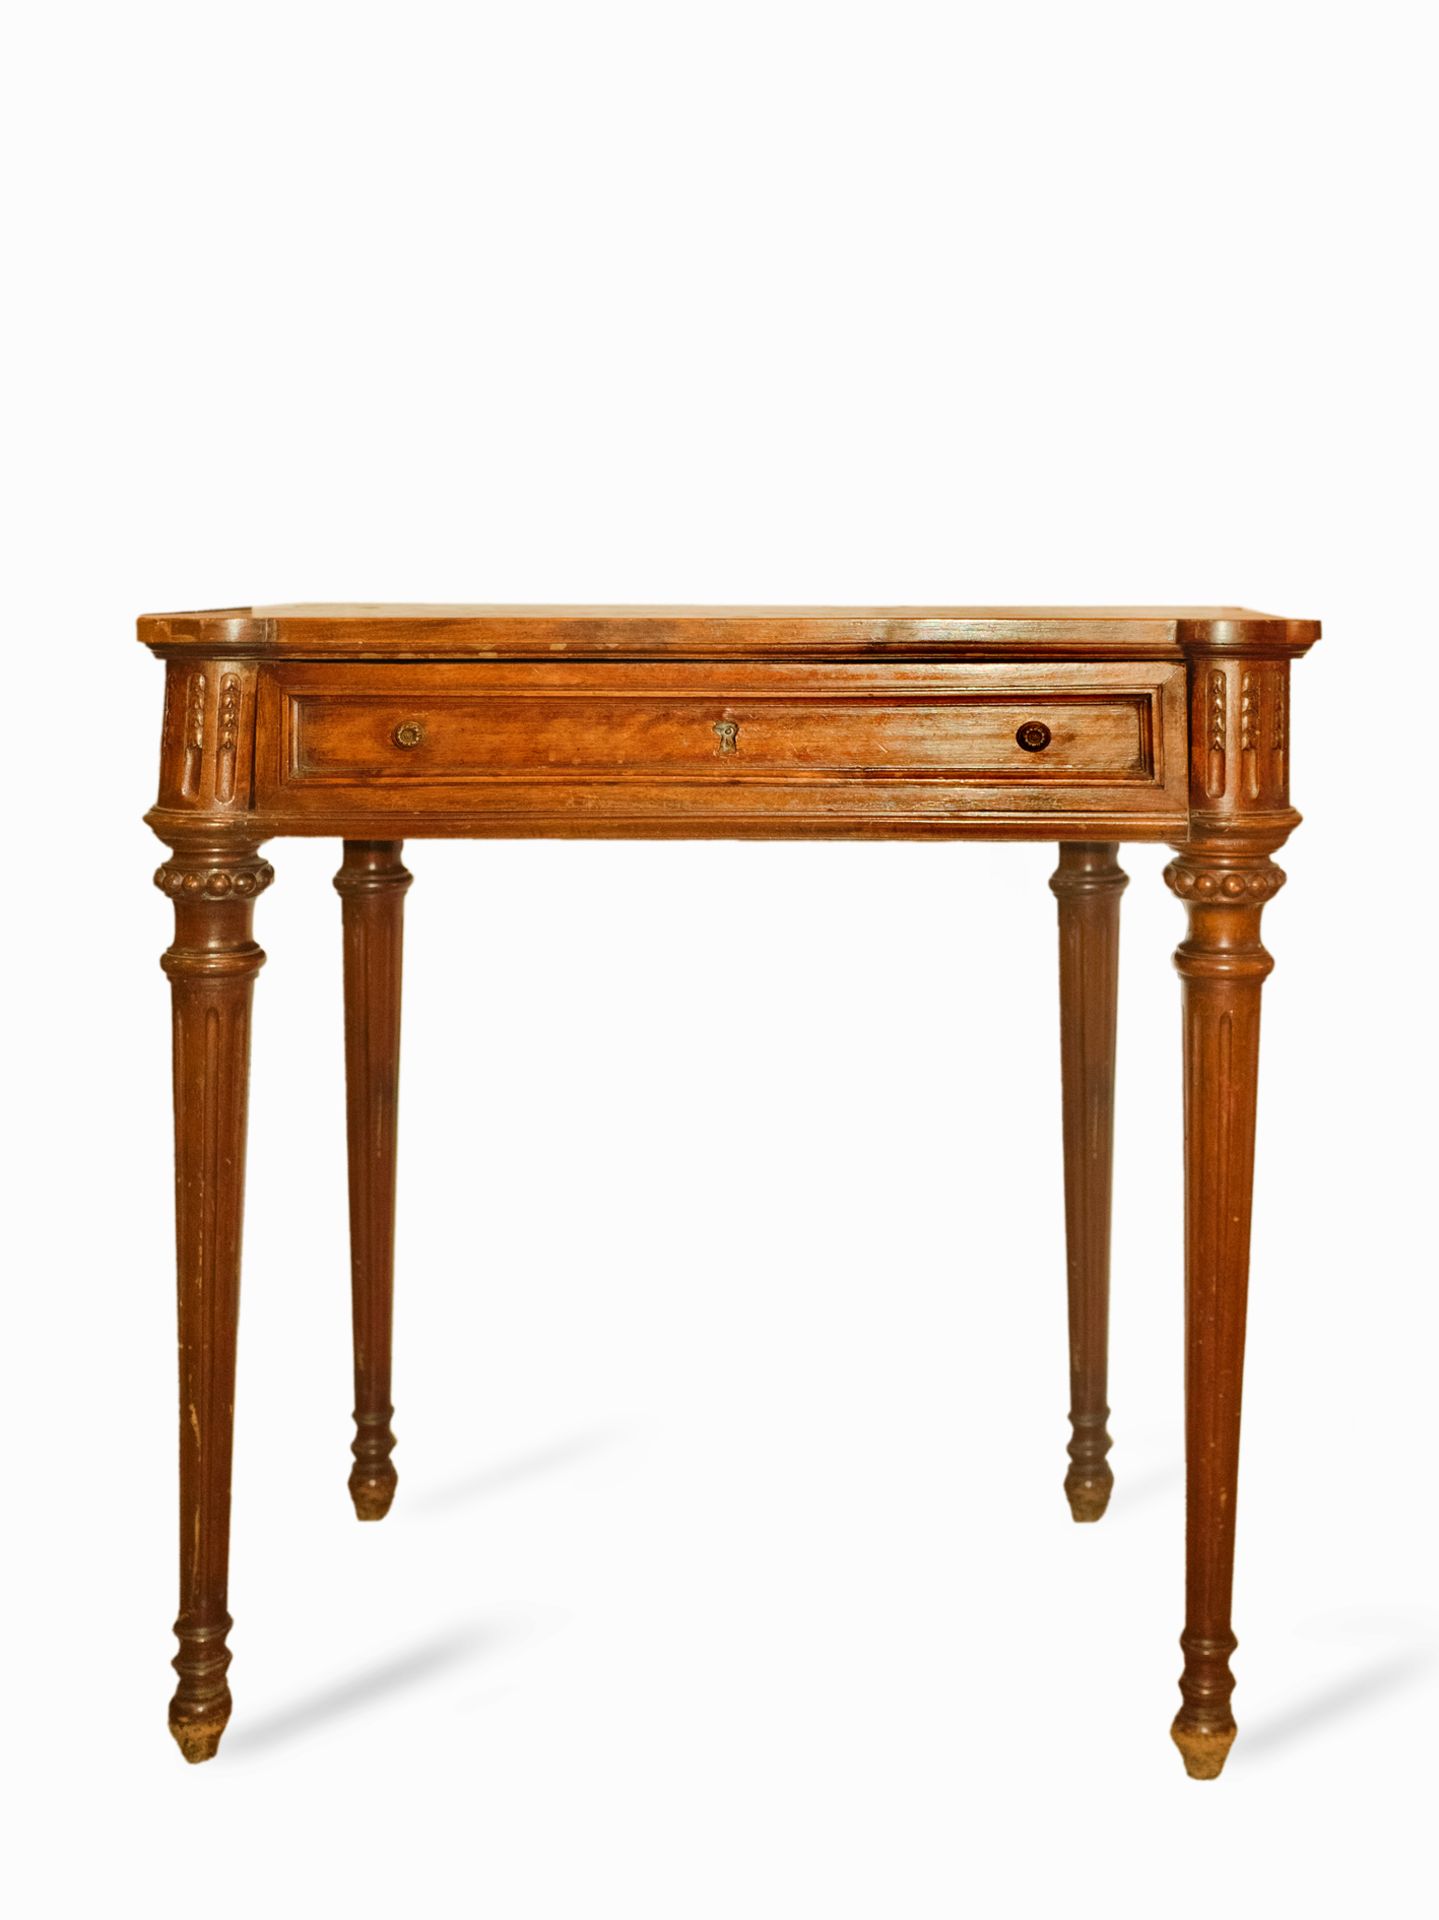 A Louis XVI style walnut table circa 1900